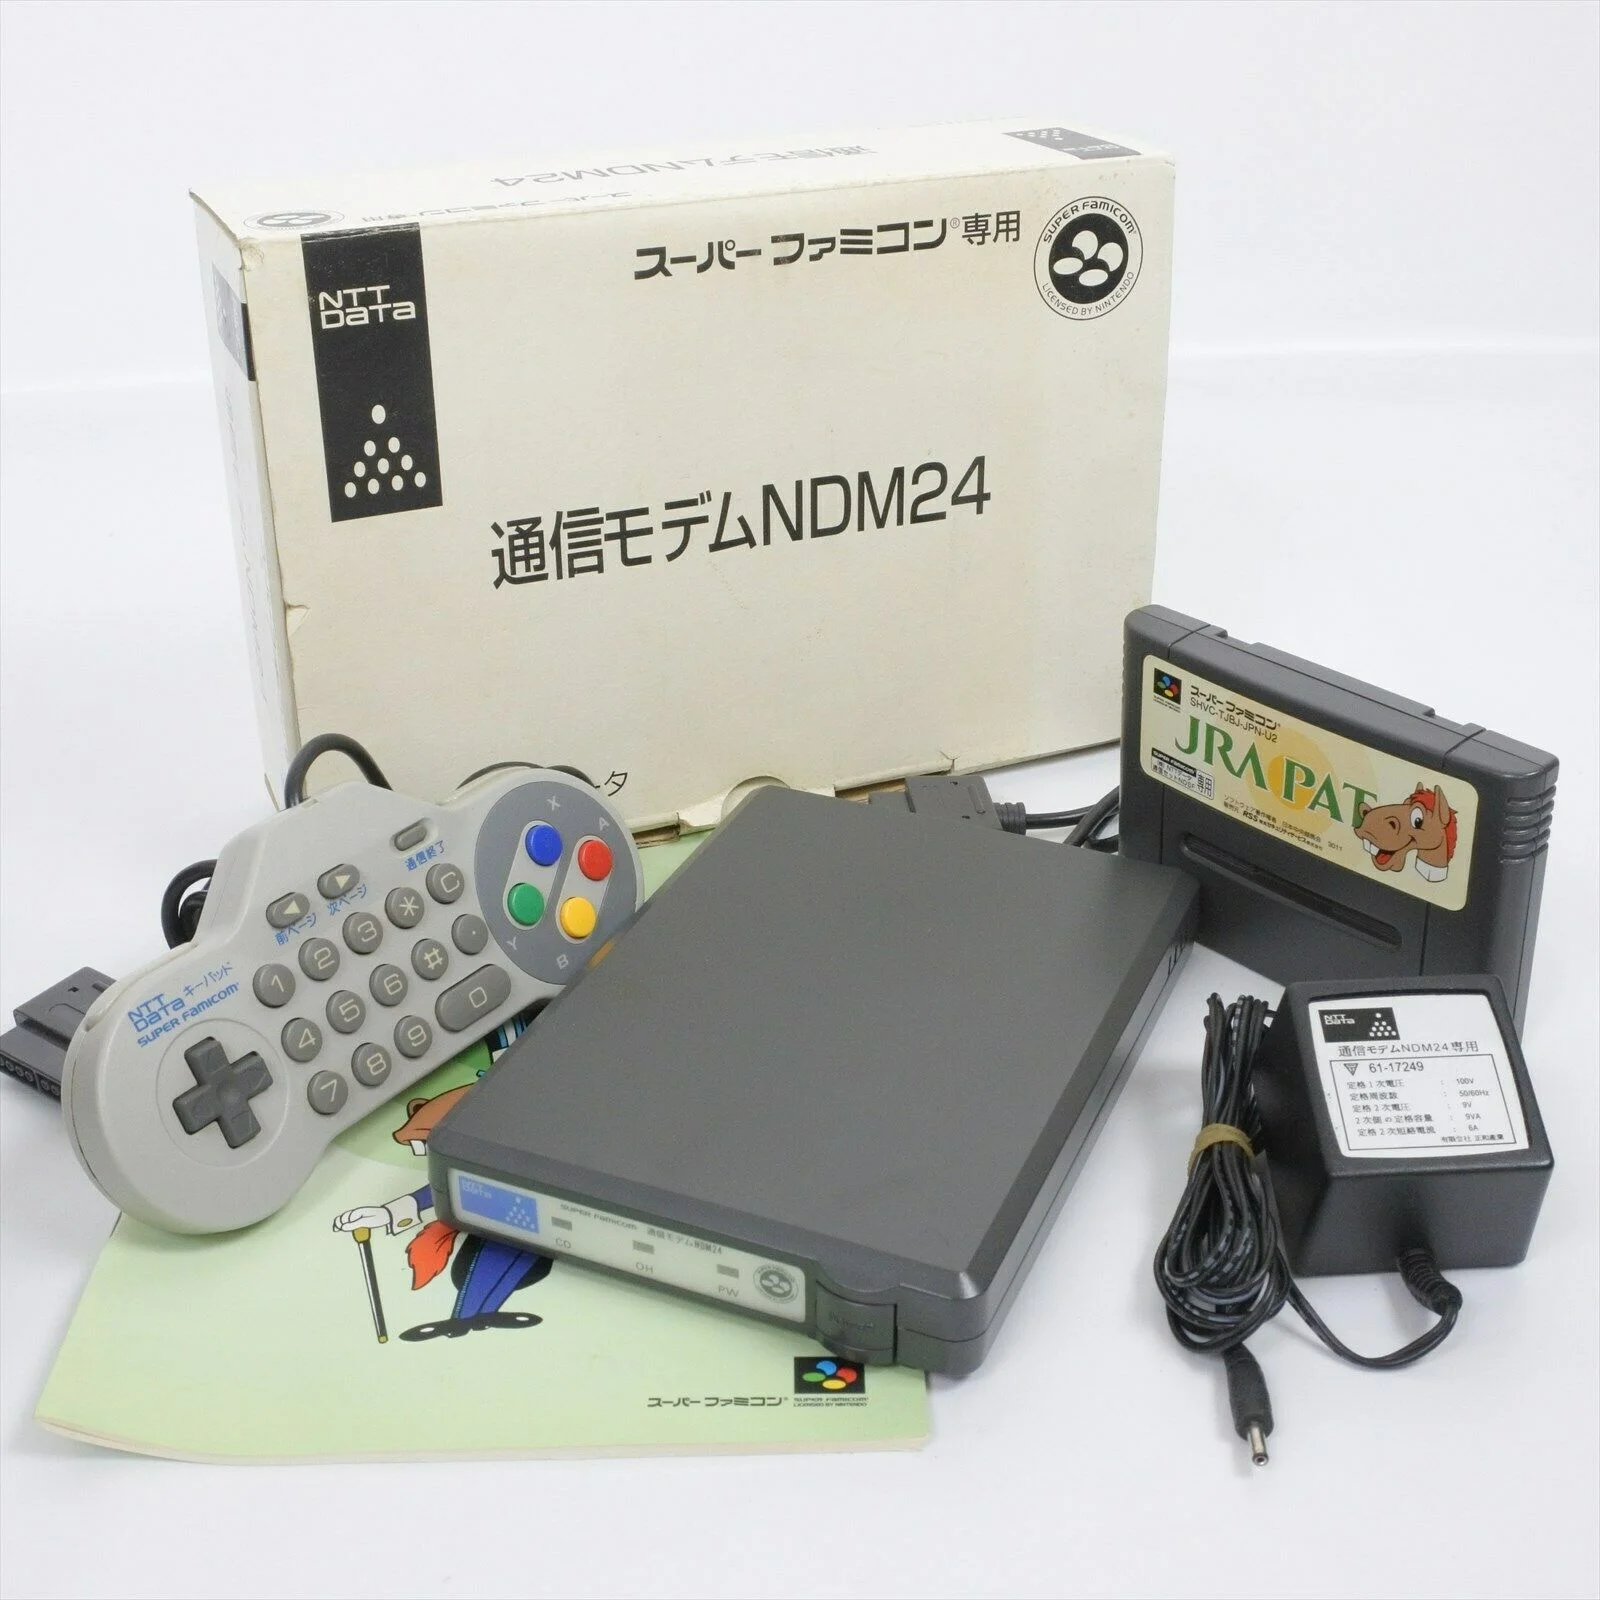  Super Famicom Network Connection NDM 24